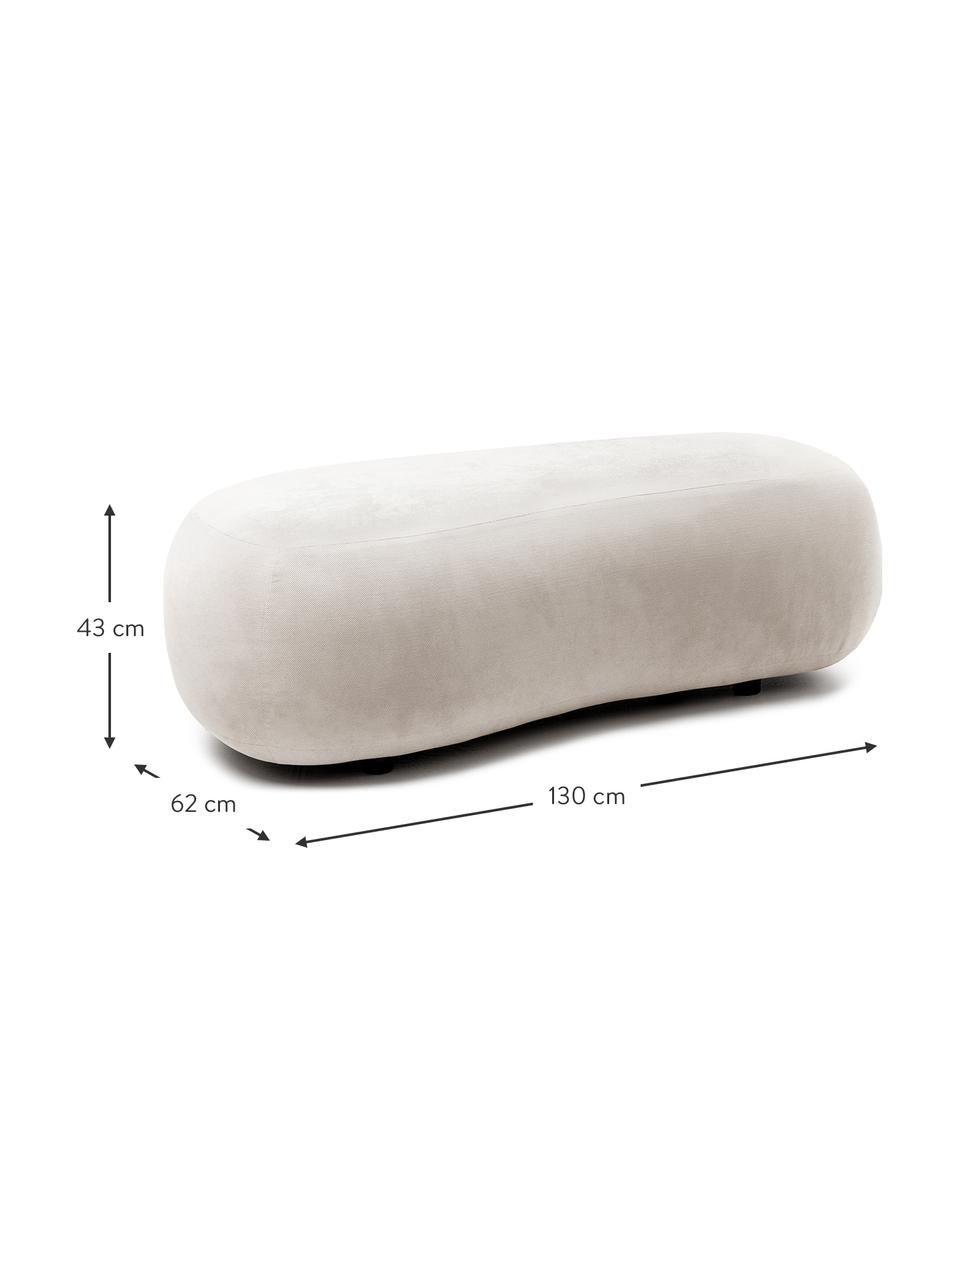 Podnožka ve tvaru ledviny Alba, Krémově bílá, Š 130 cm, V 62 cm